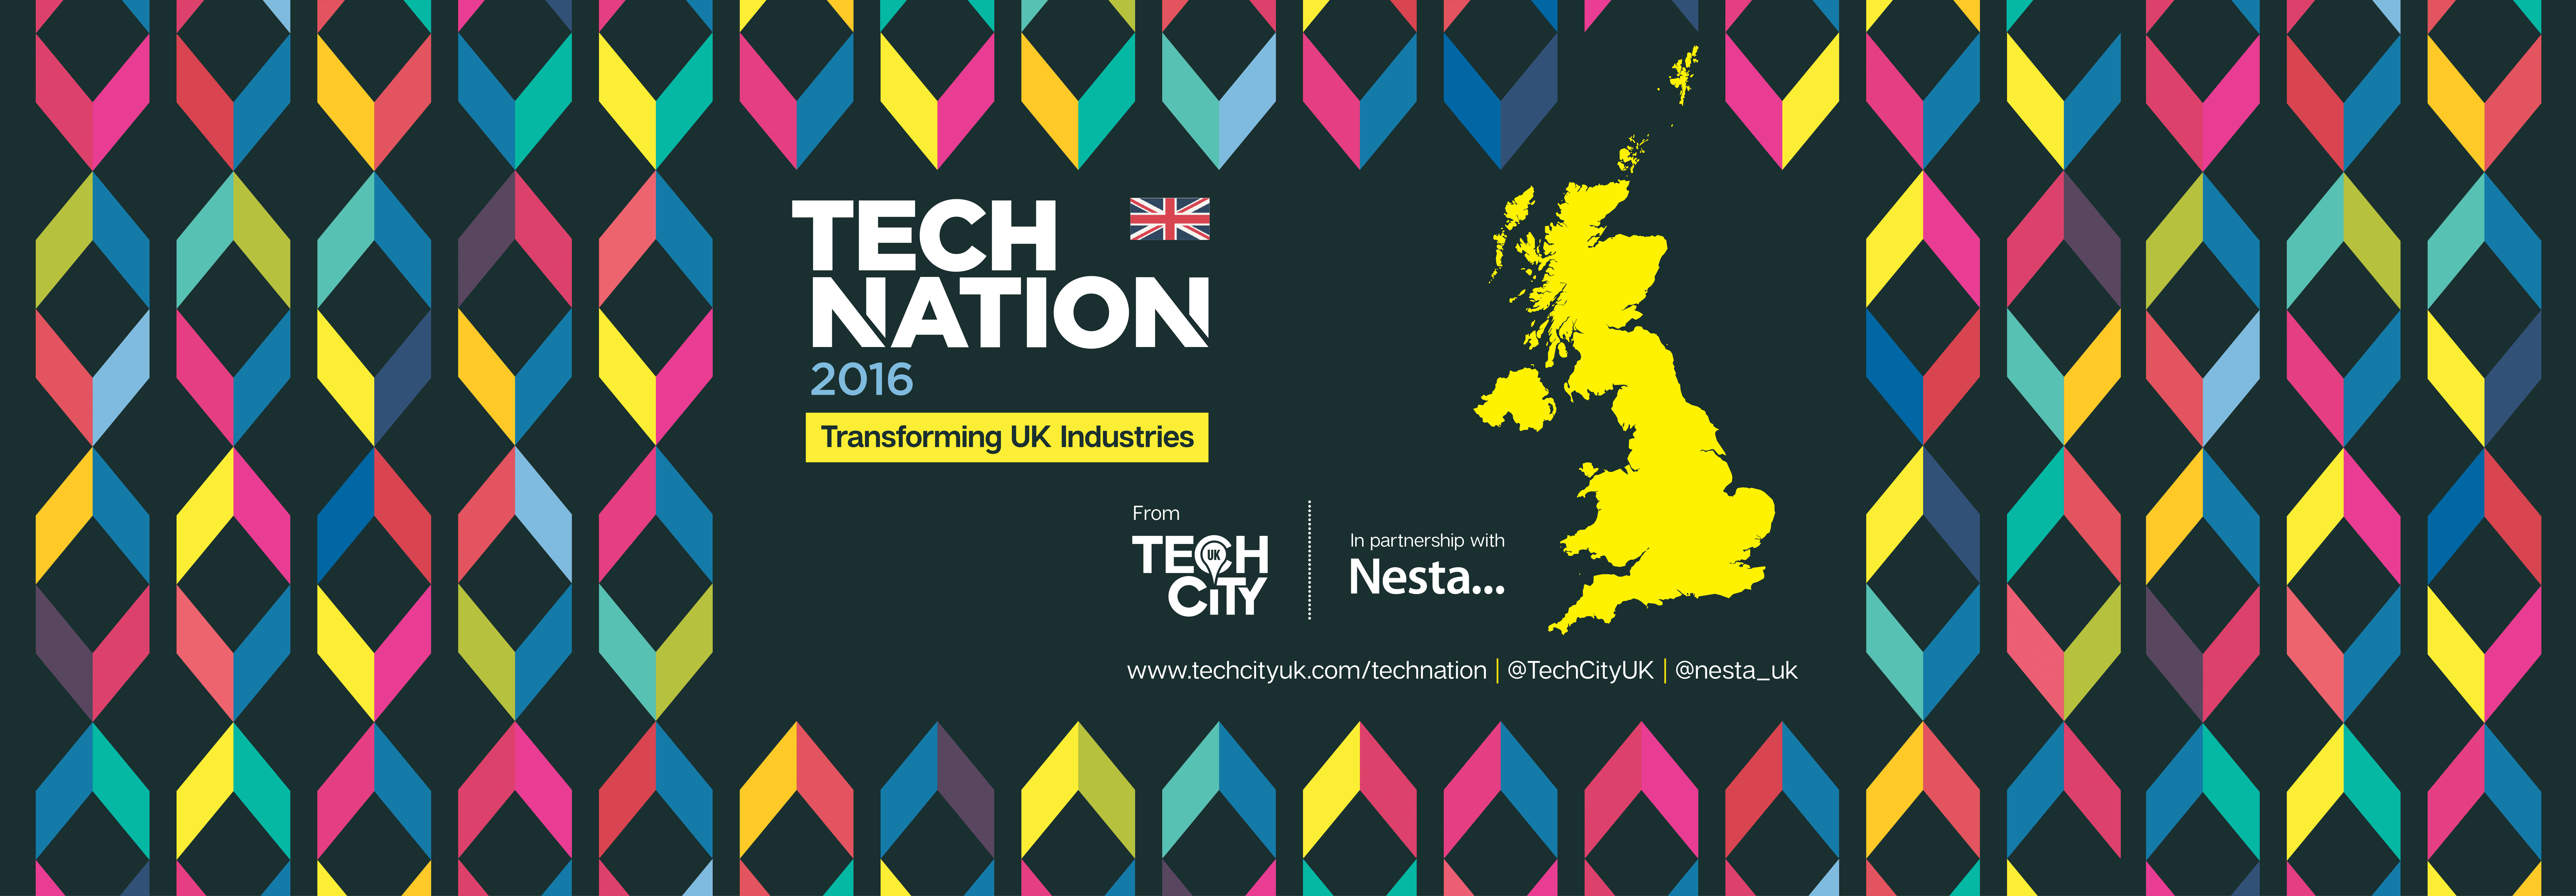 Tech Nation 2016